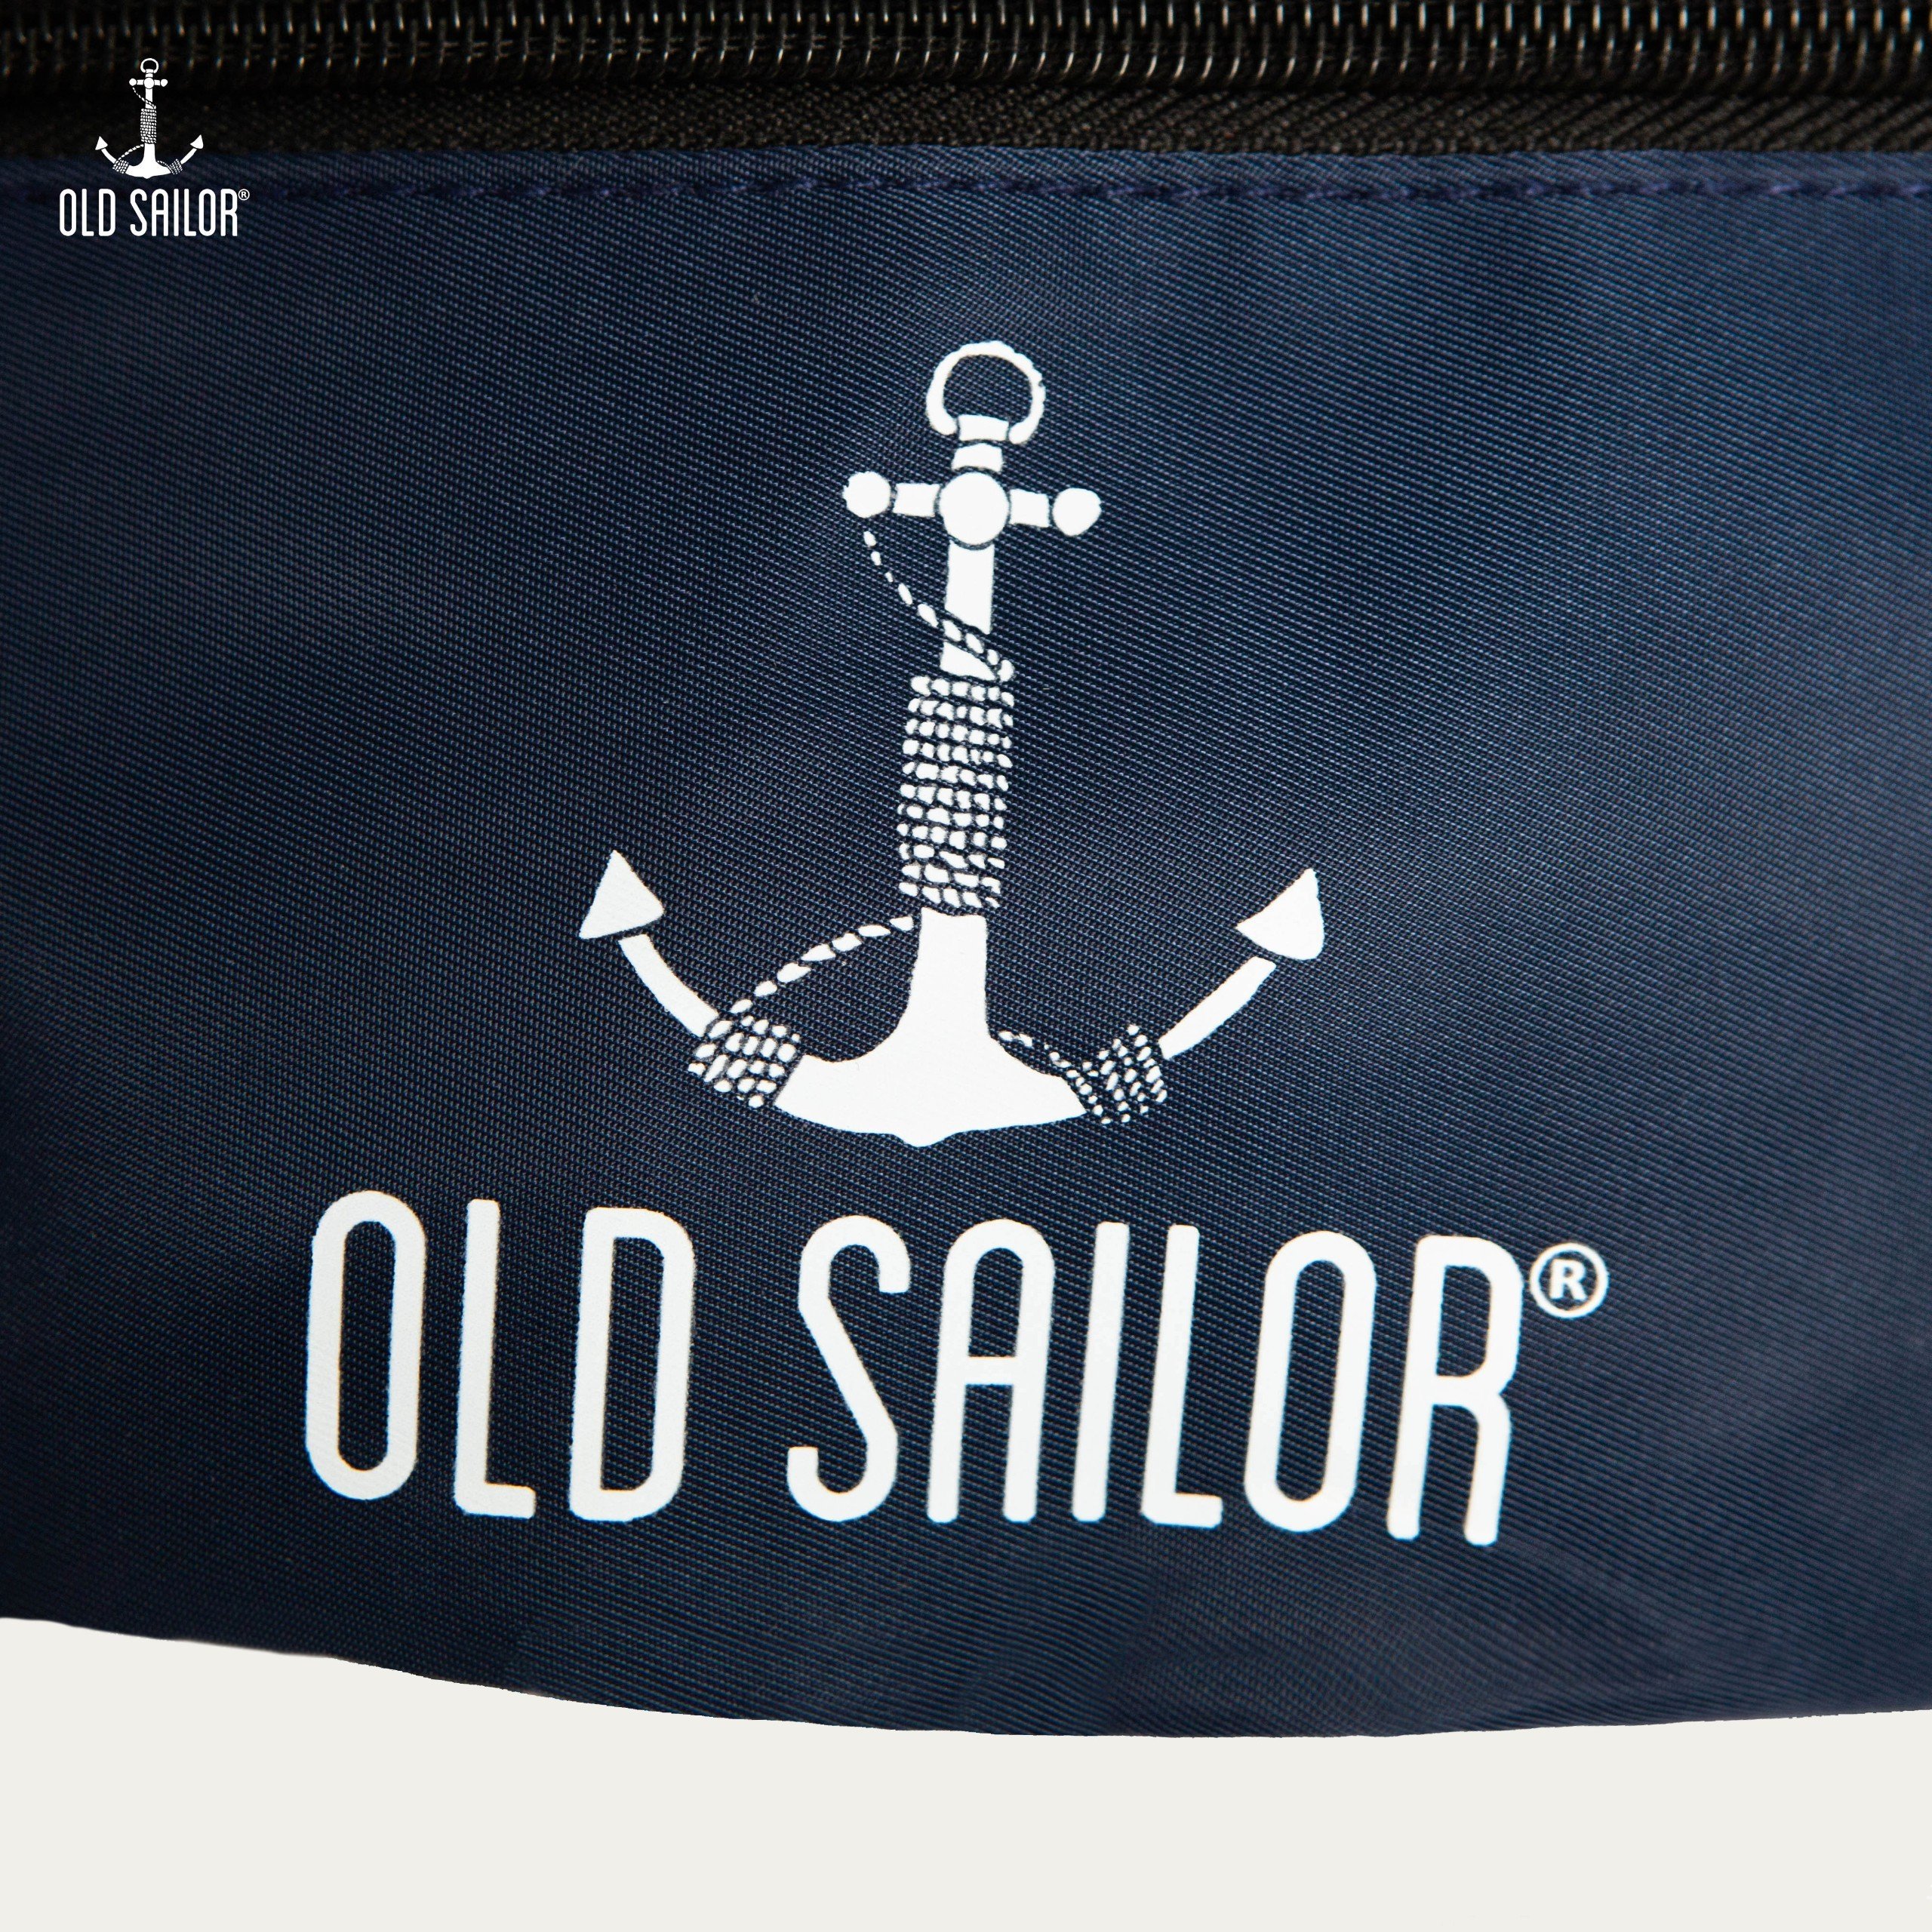 Túi đeo chéo Old Sailor - O.S.L CROSSDY BAG - NAVY - MNXD21029